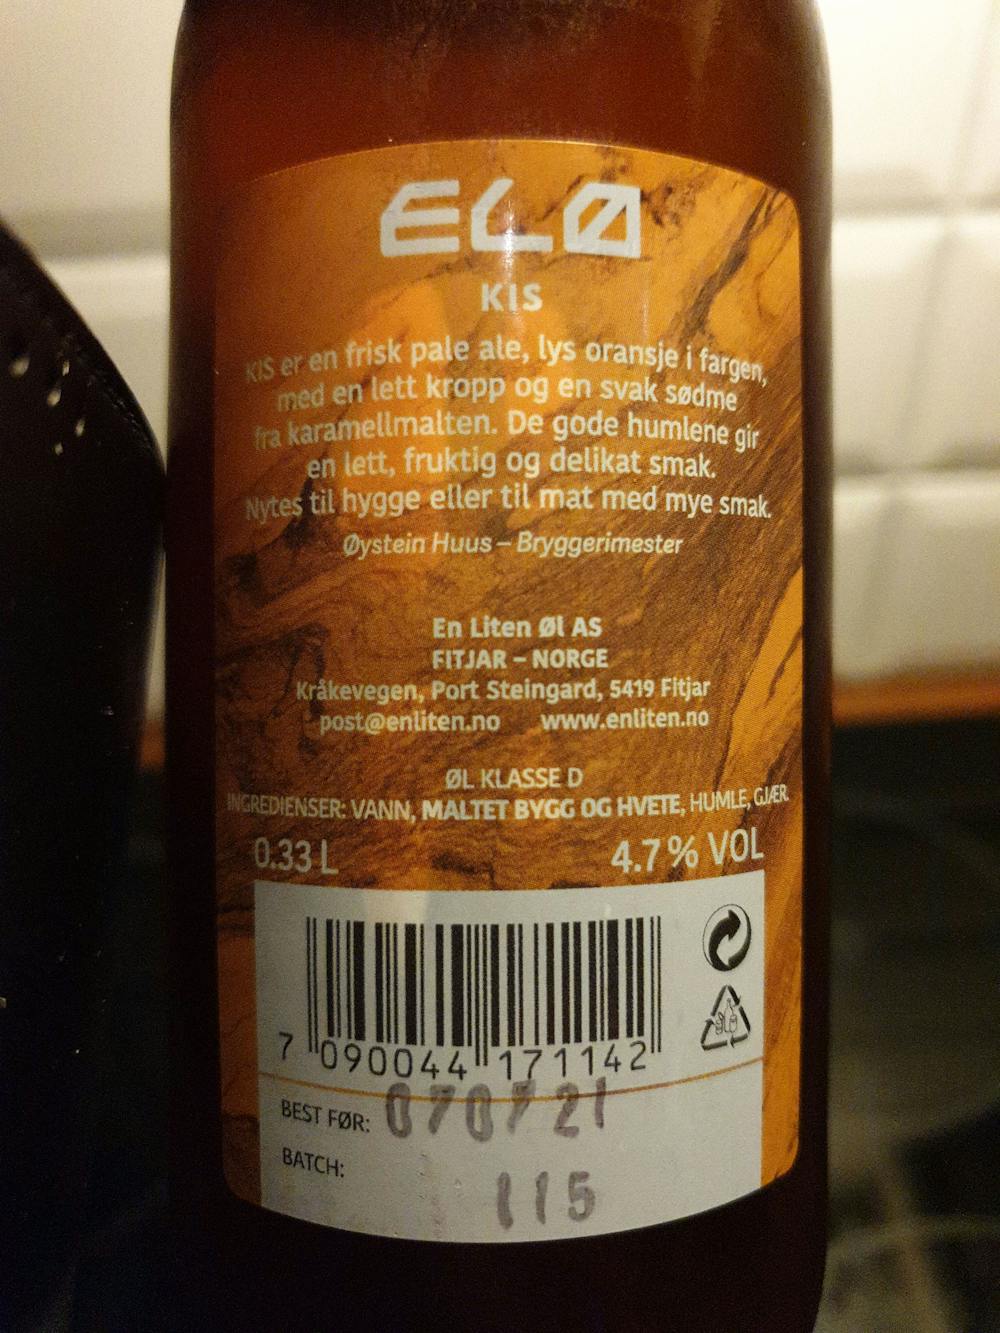 Ingredienslisten til Elø Kis, lys ale